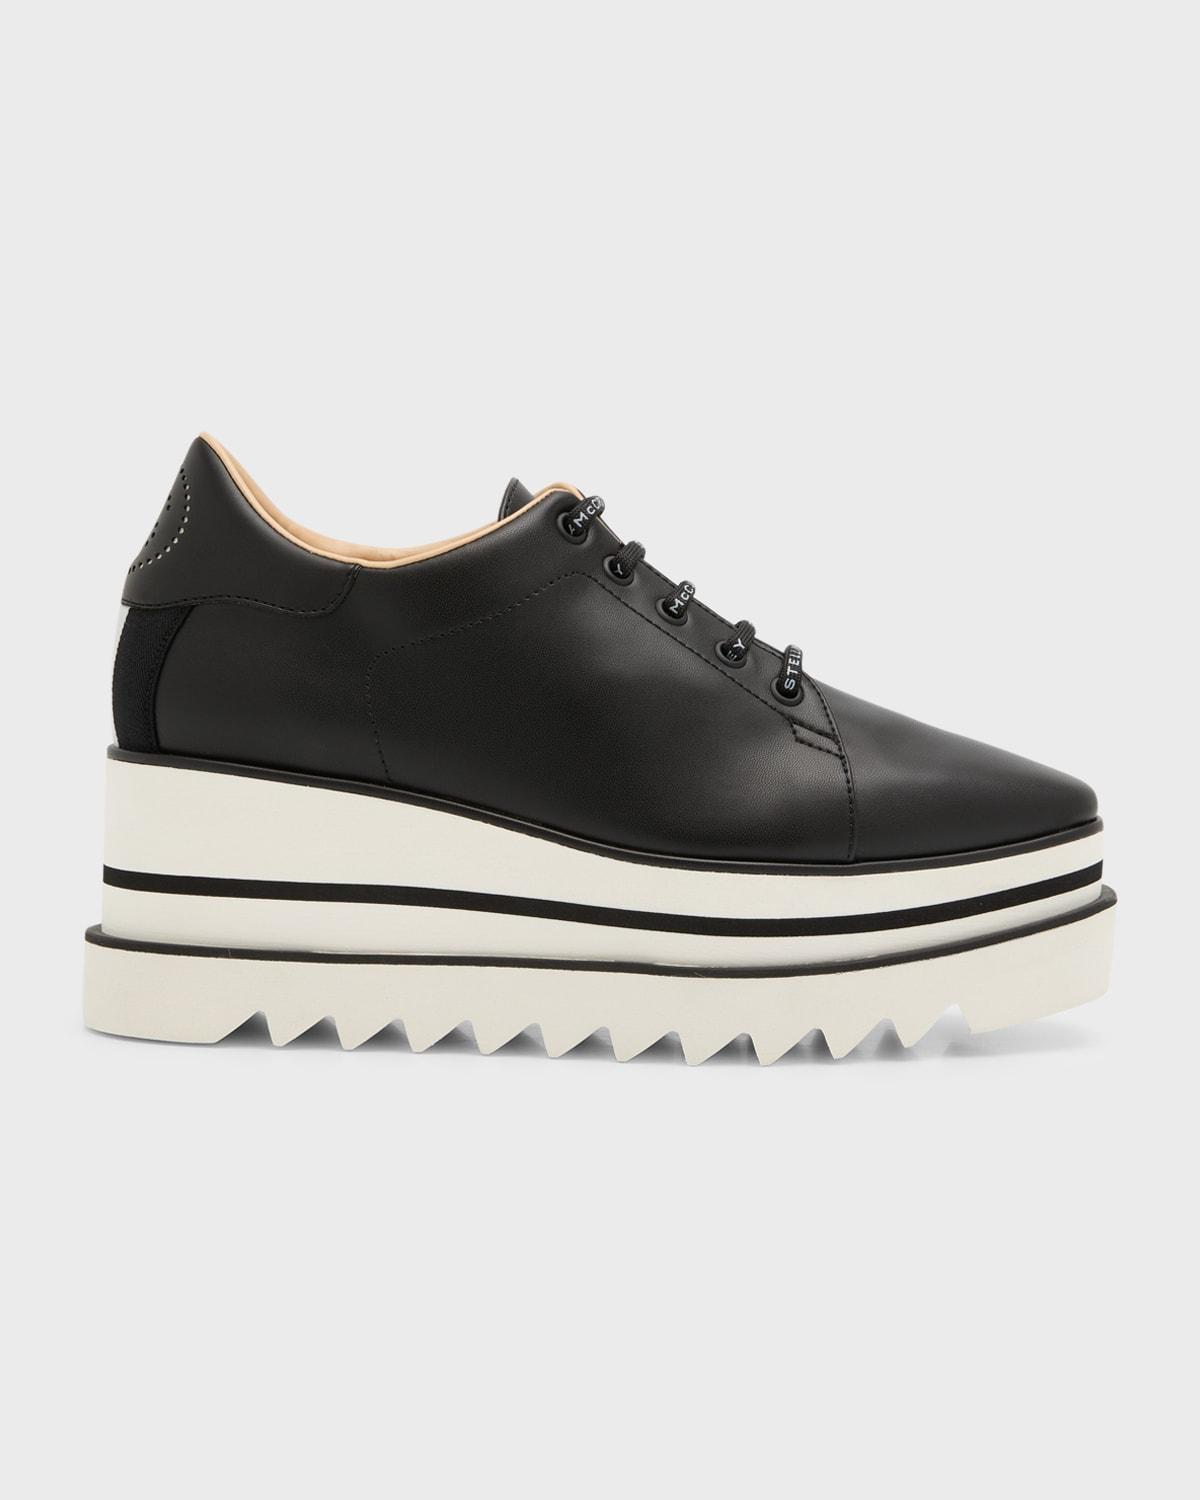 Stella McCartney Sneak-Elyse Platform Sneaker Product Image